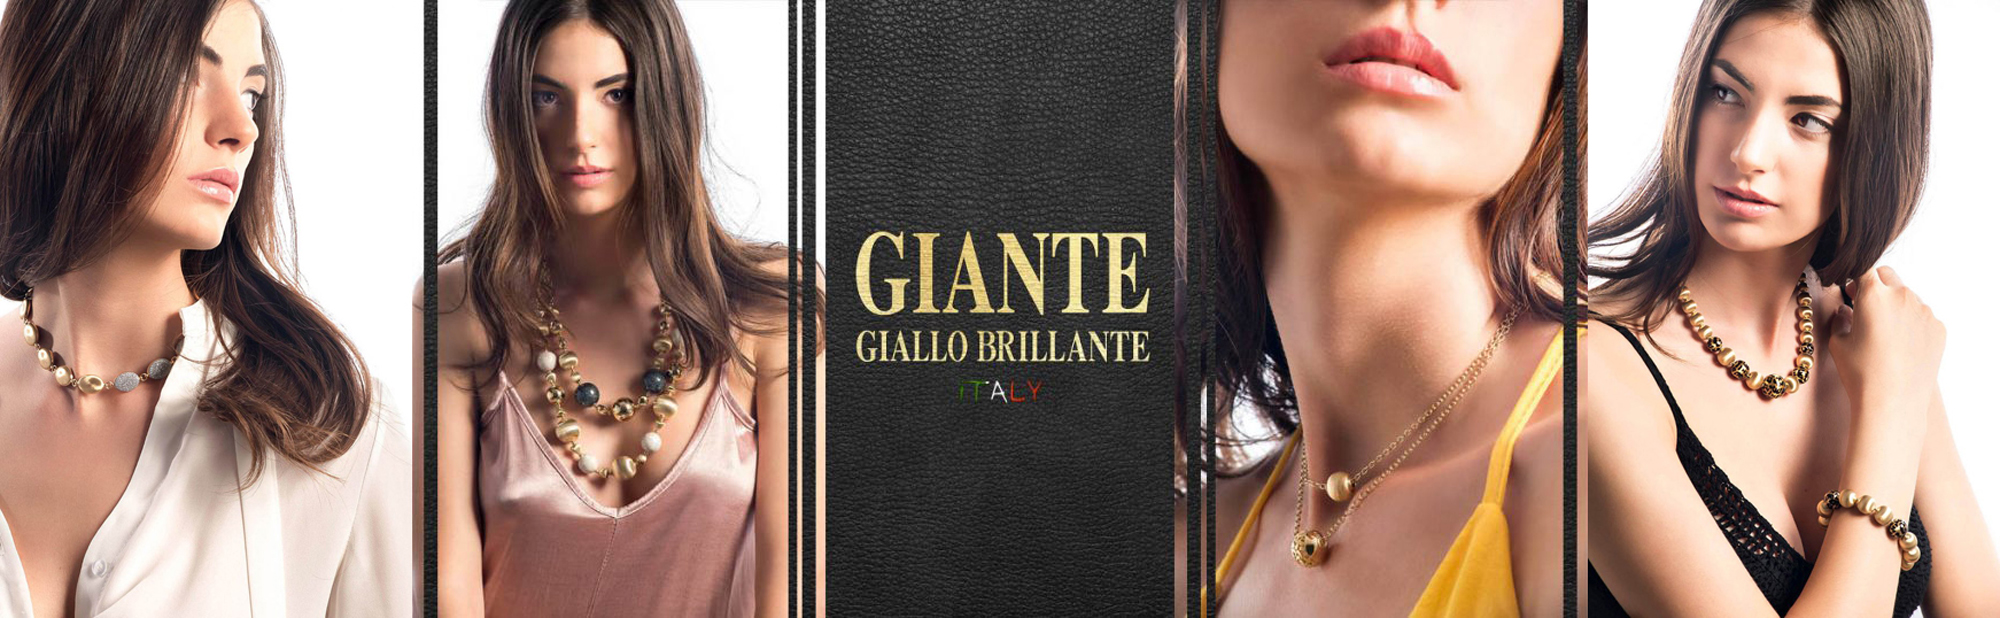 Giante Giallo Brillante Italy Gold Jewellery Logo and model shooting